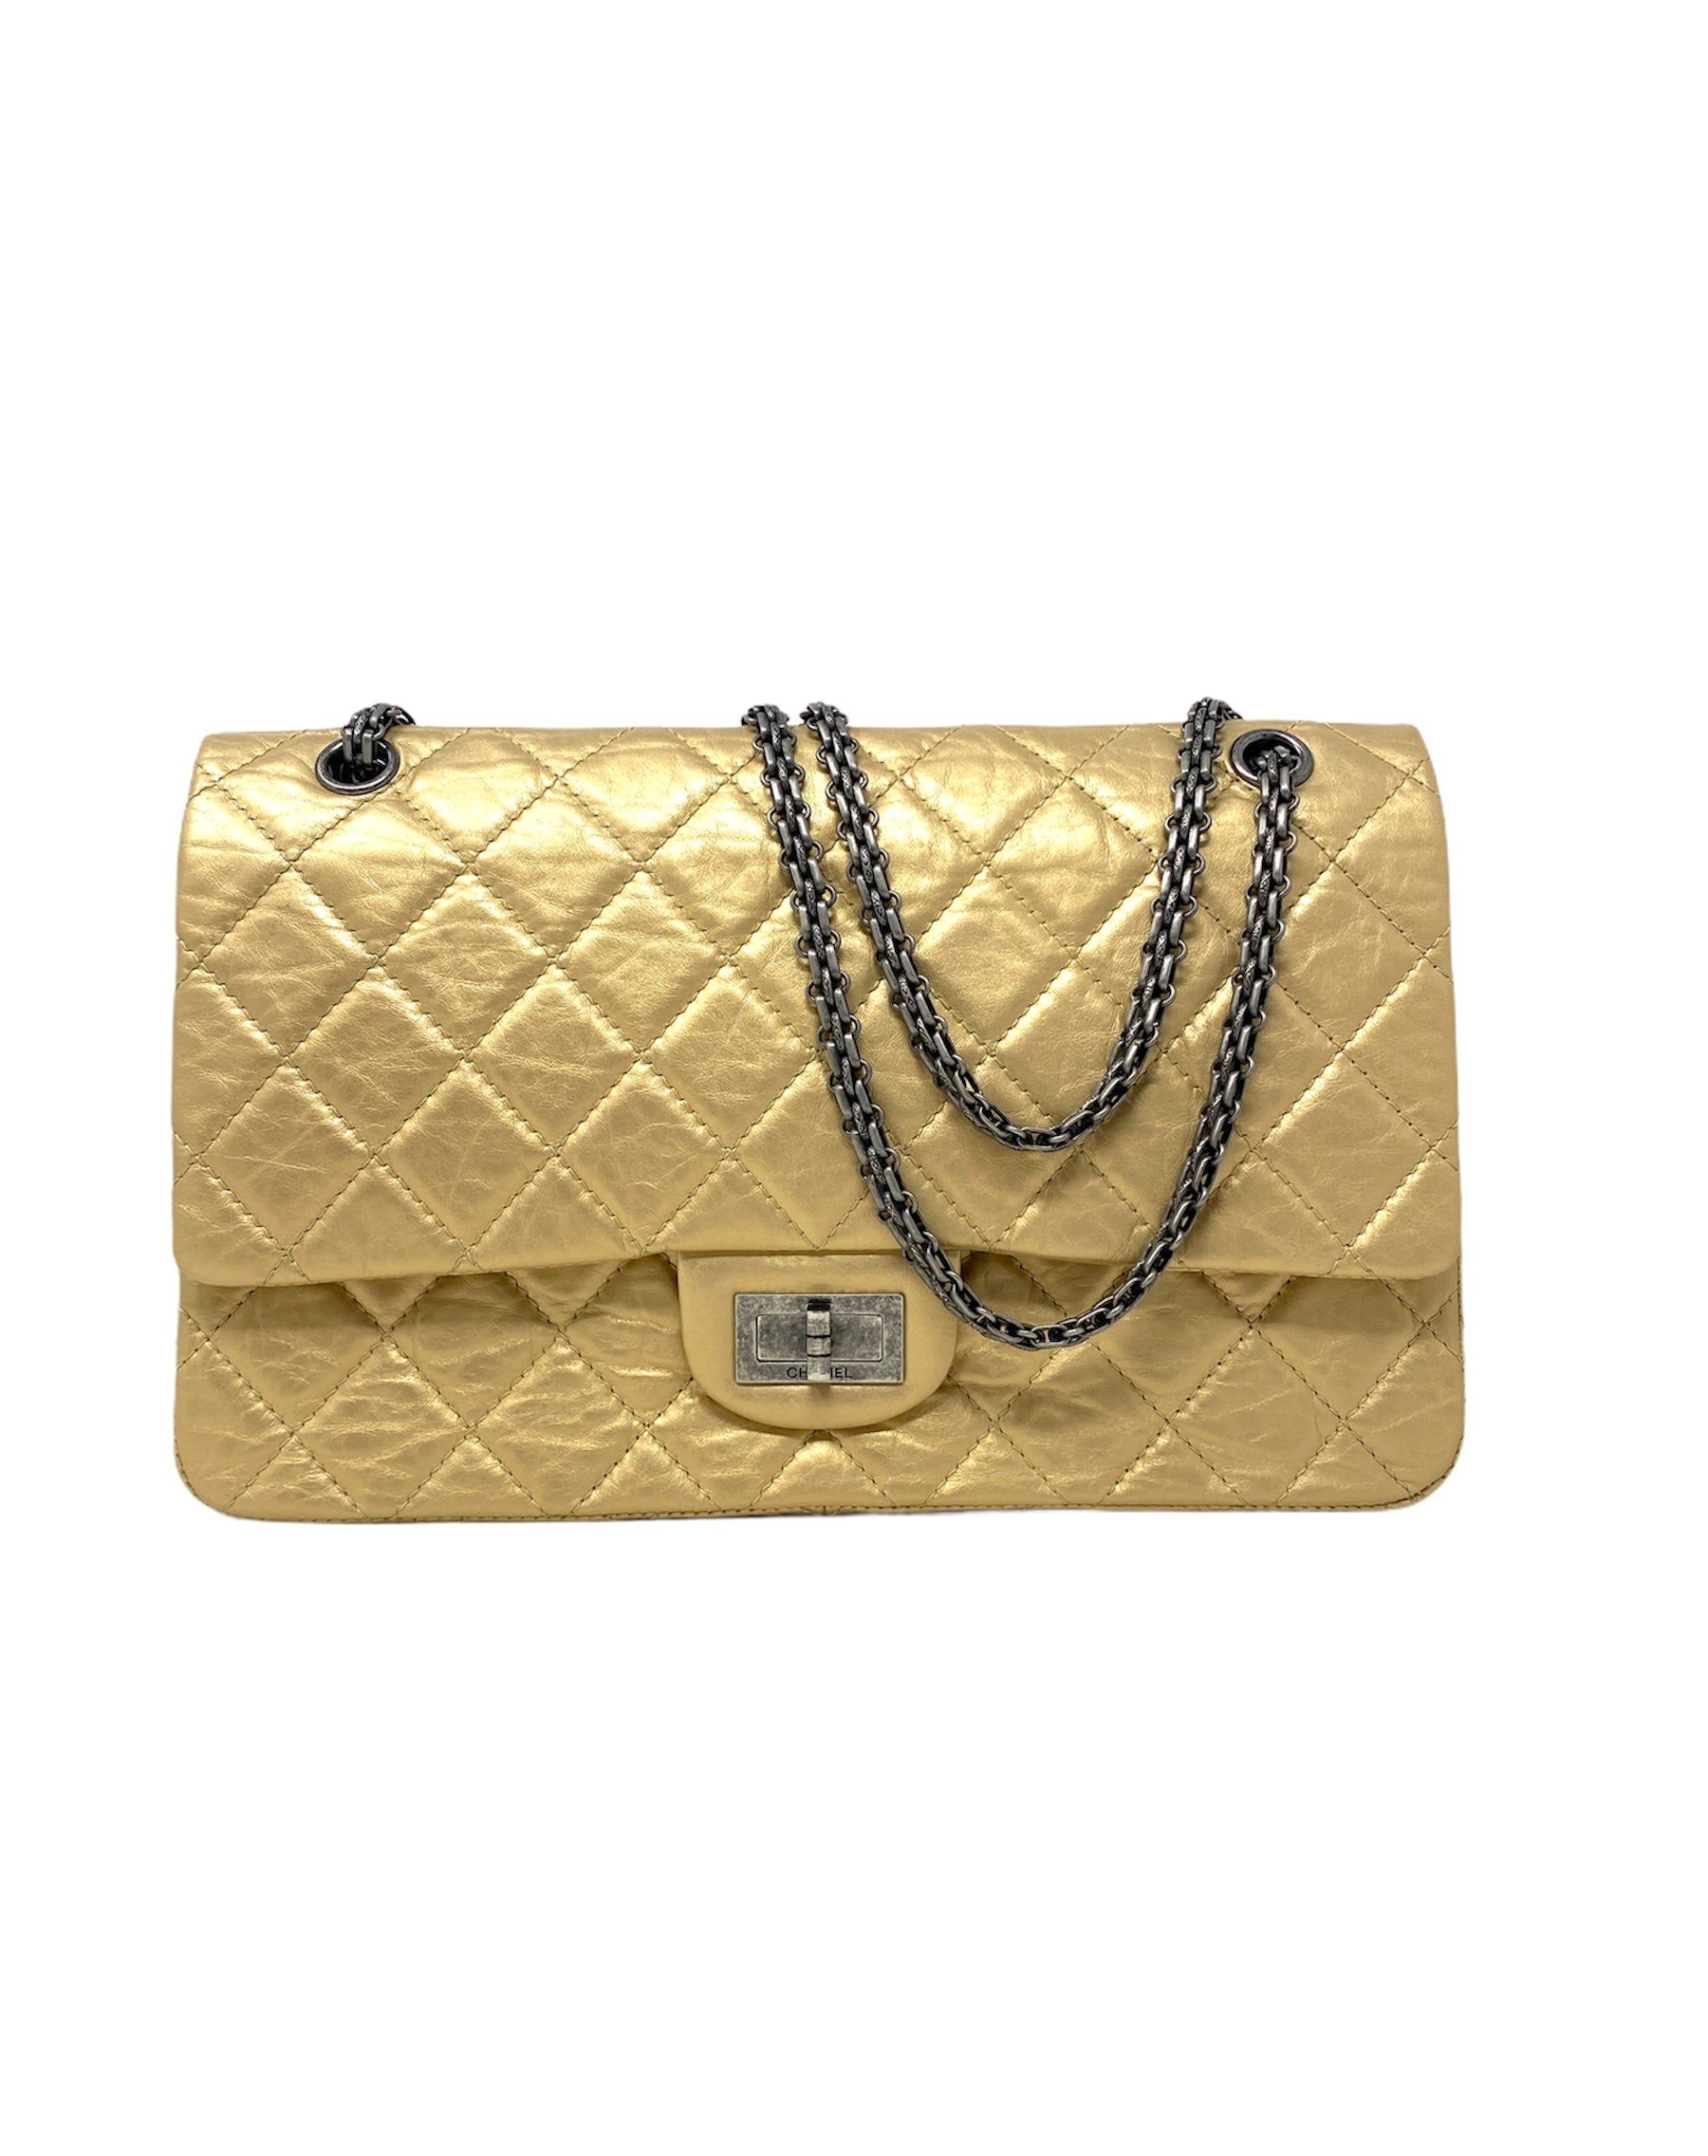 Chanel 2.55 Metaic Gold Handbag